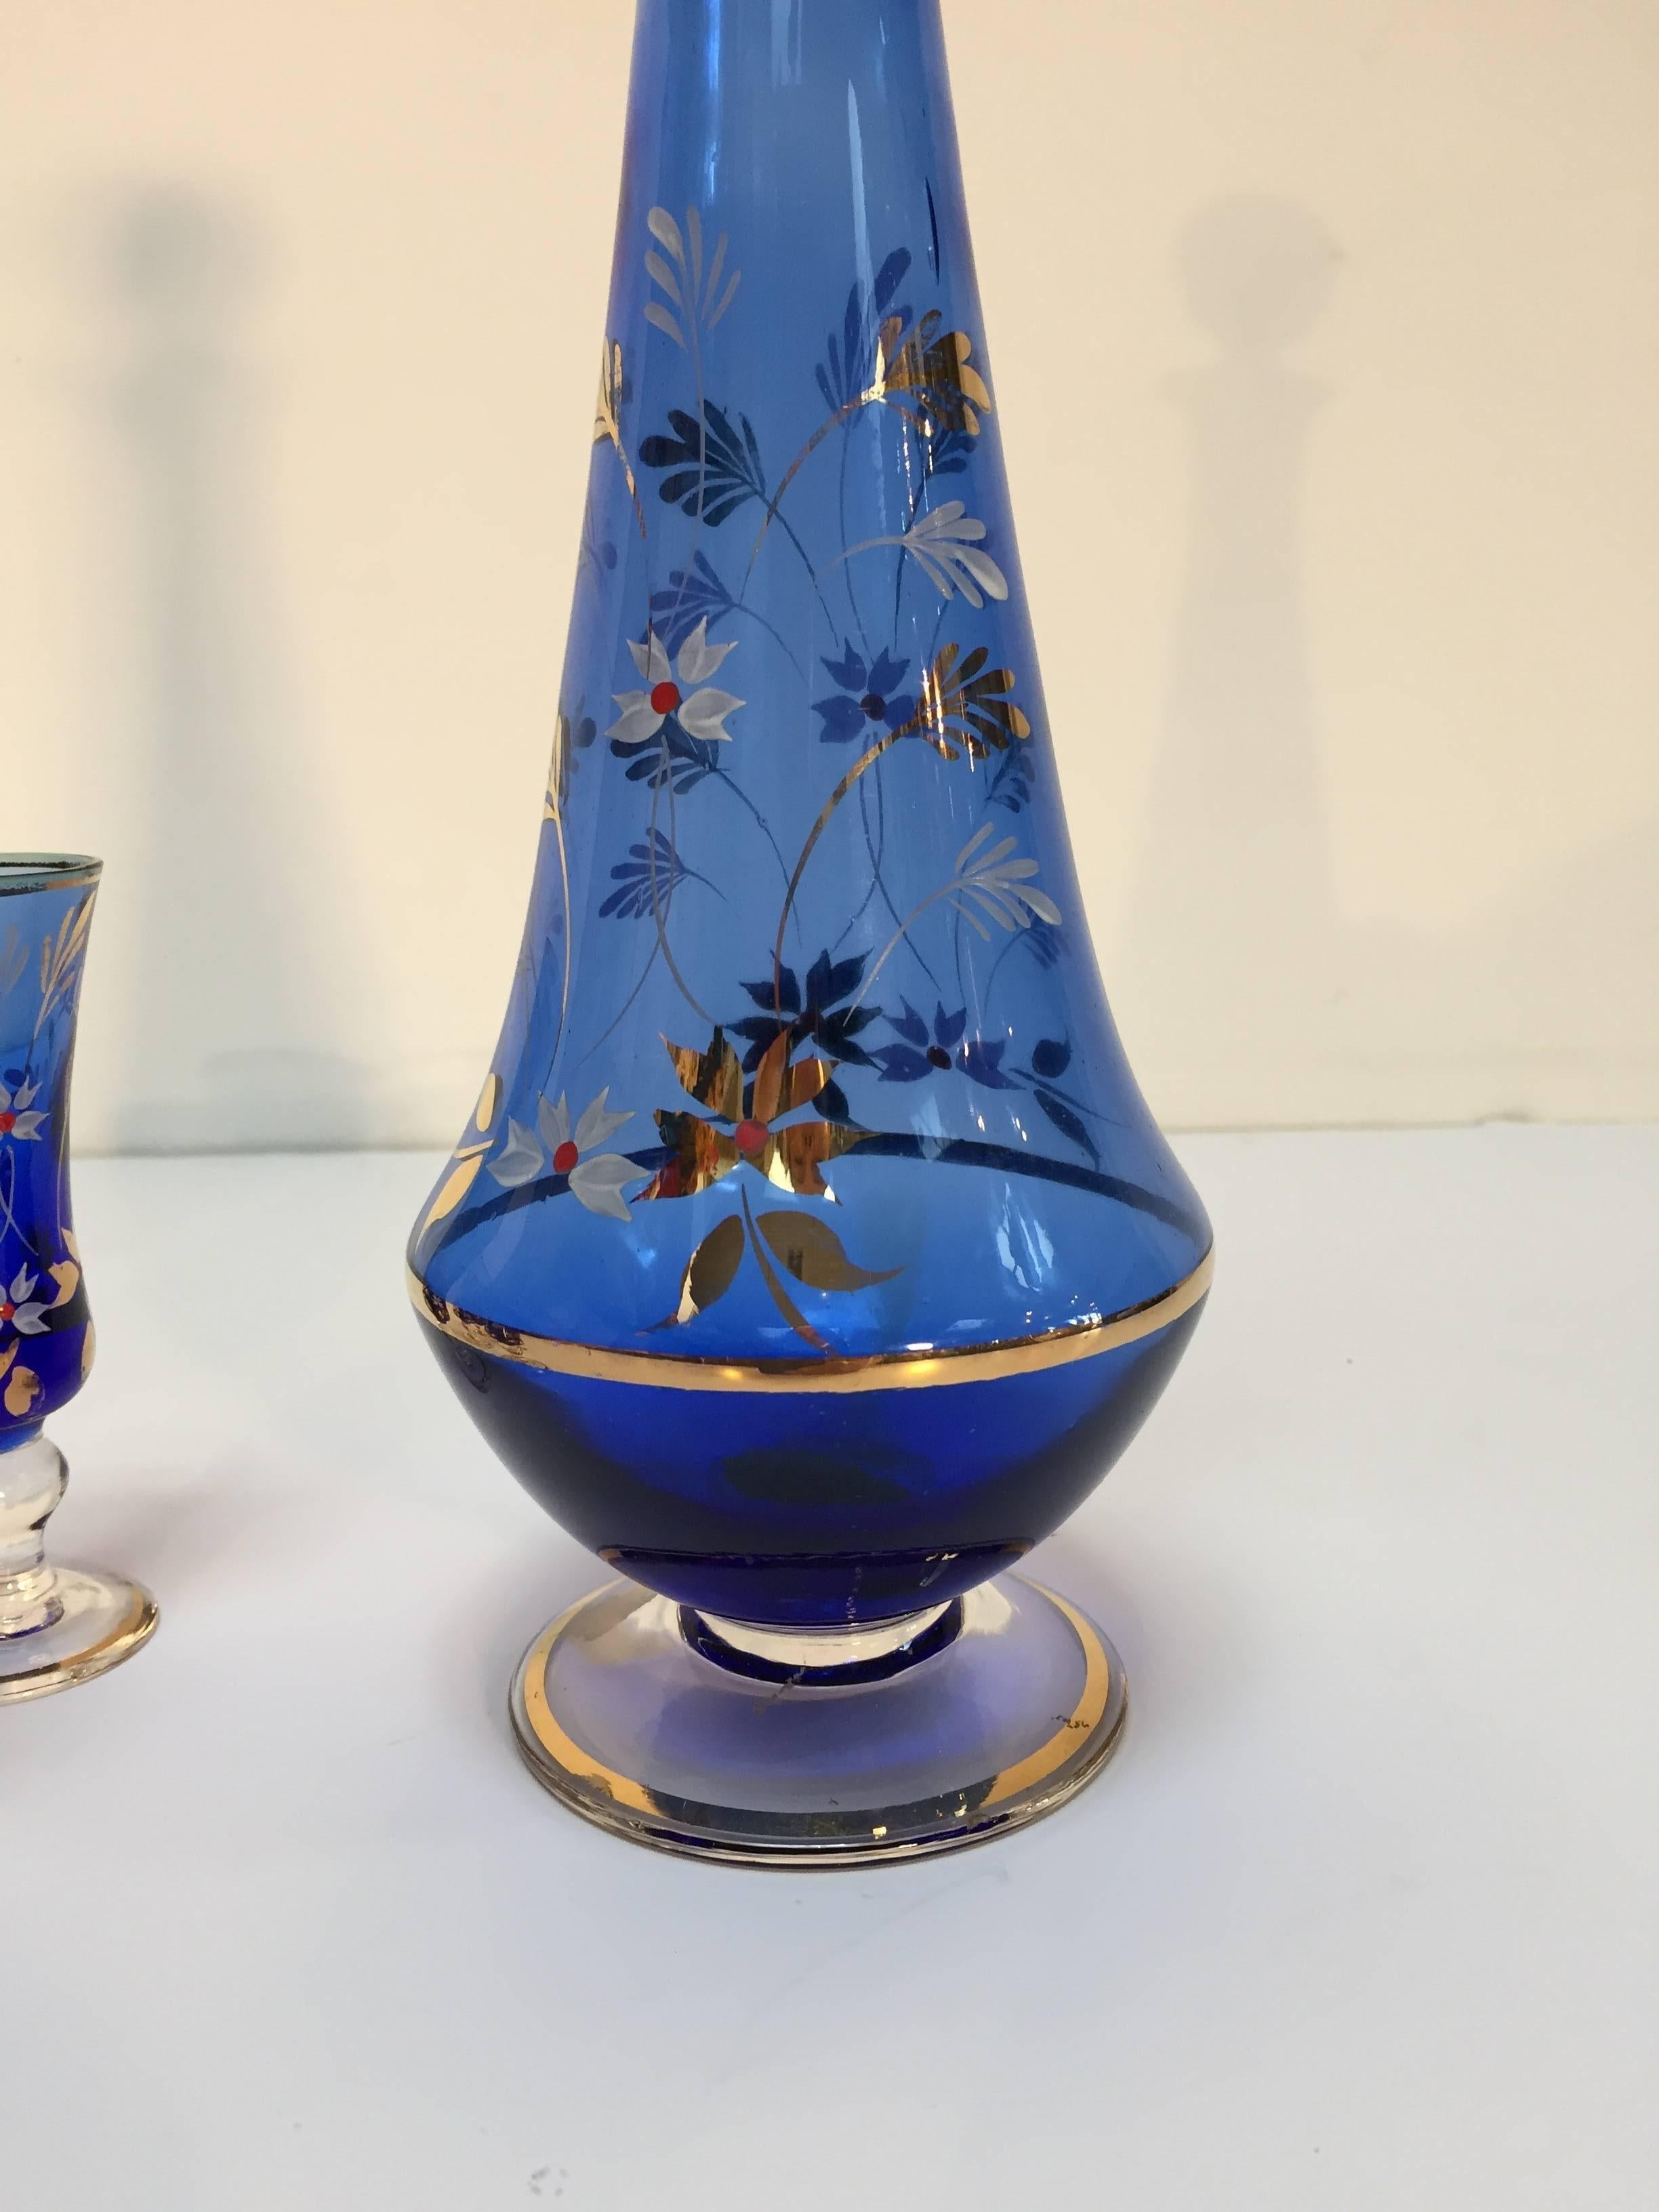 Portuguese Cobalt Blue Enameled Glass Liquor Set Decanter and Six Glasses from Portugal